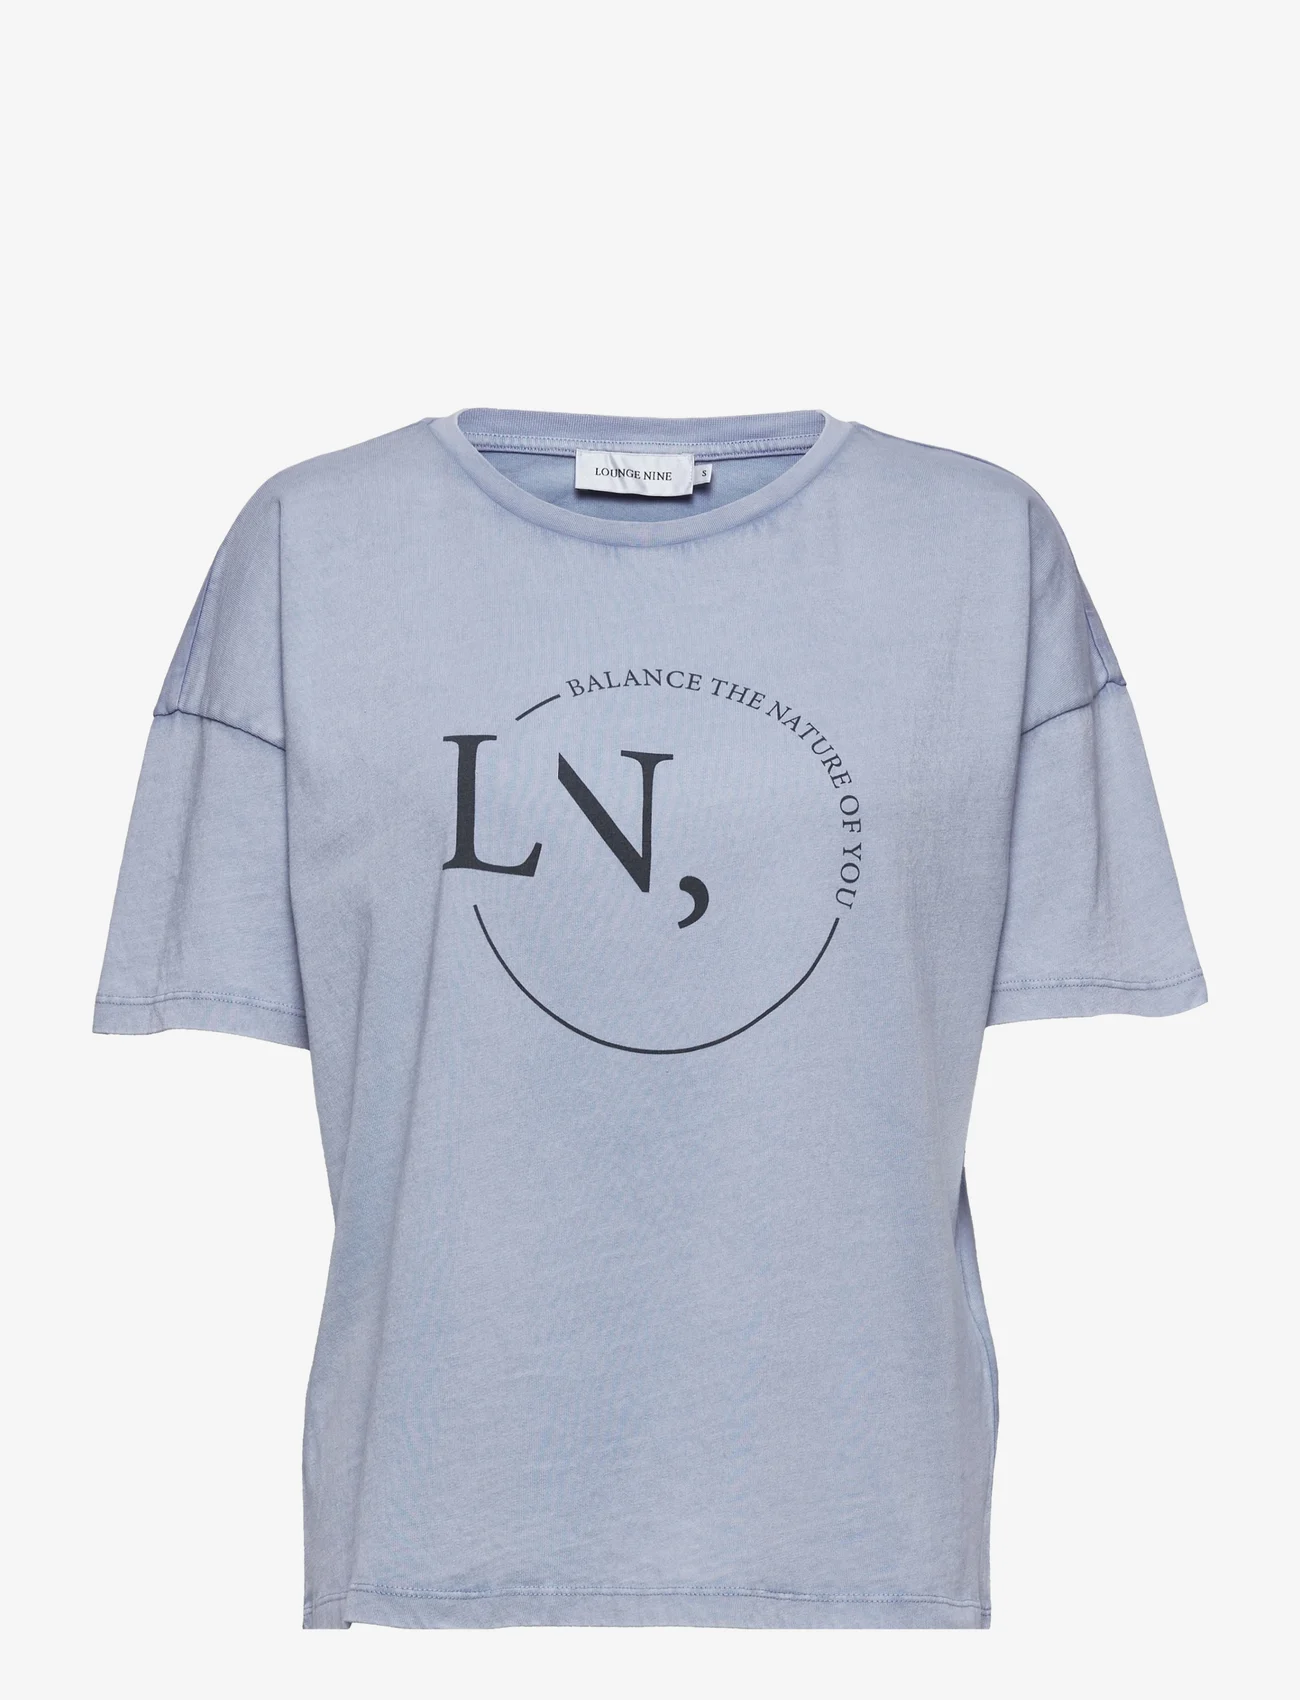 Lounge Nine - LNHanky T-shirt - t-shirts & tops - blue heron - 0